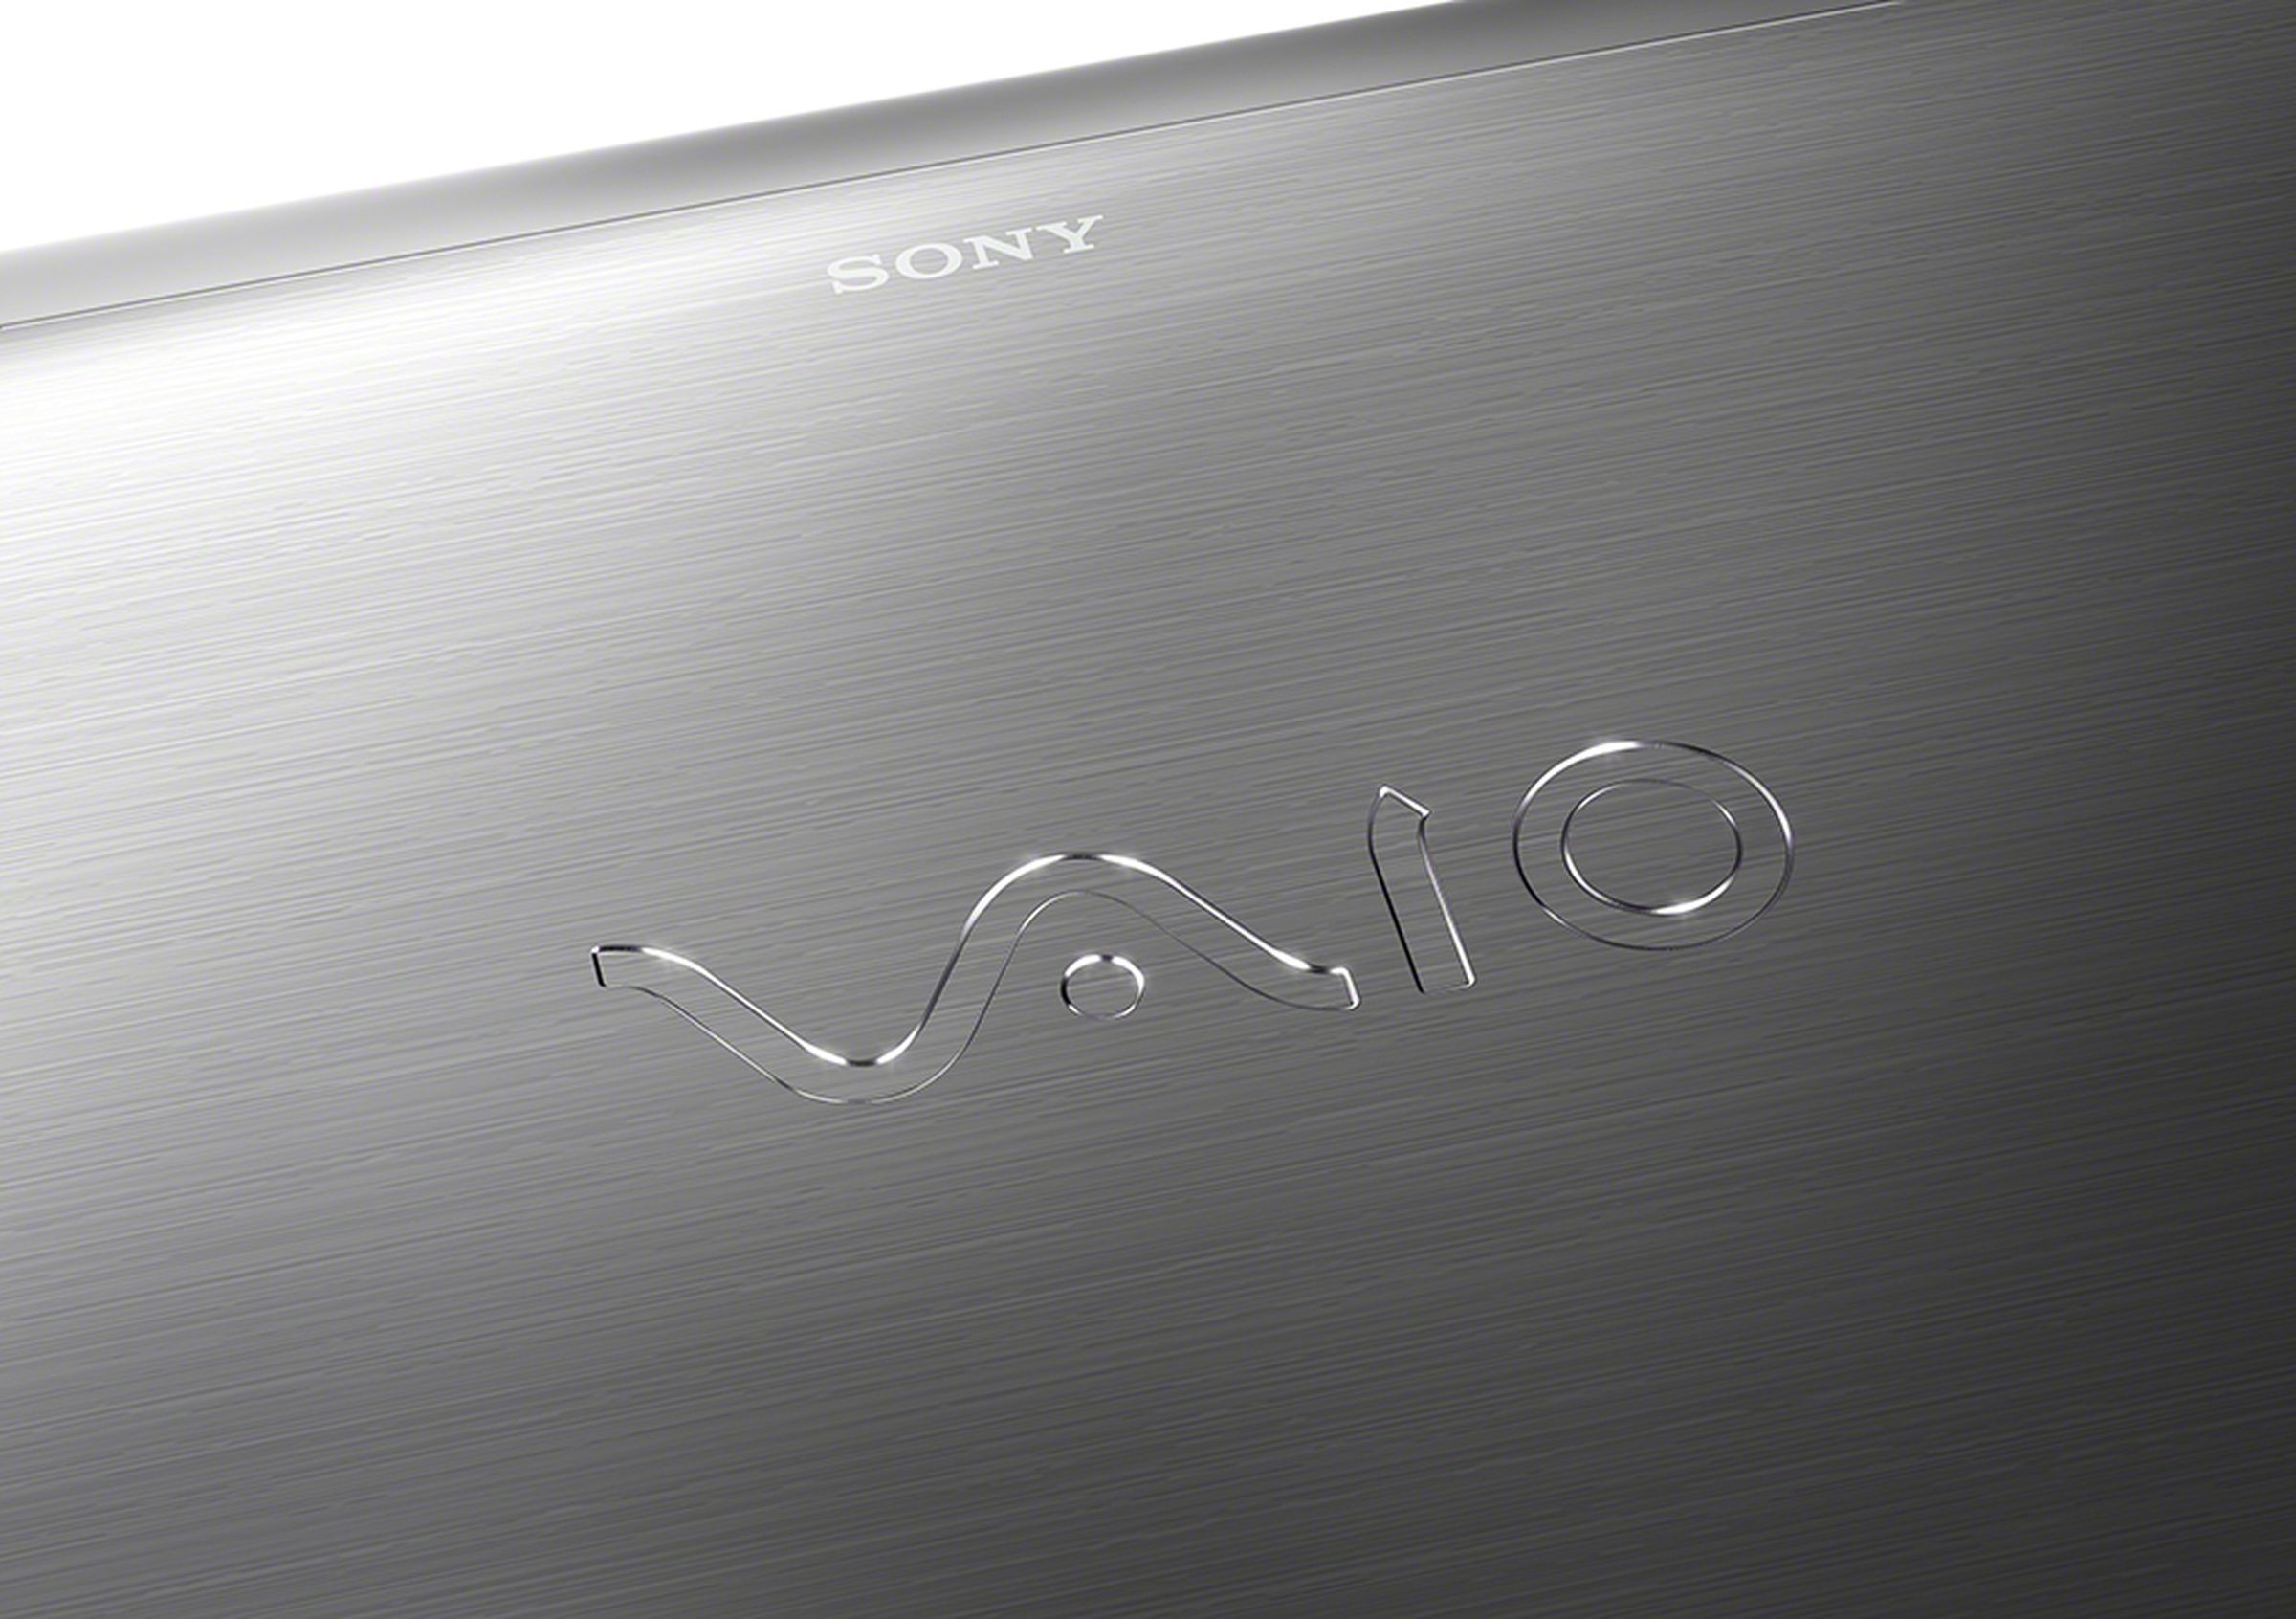 Sony VAIO E (mid 2012) press pictures